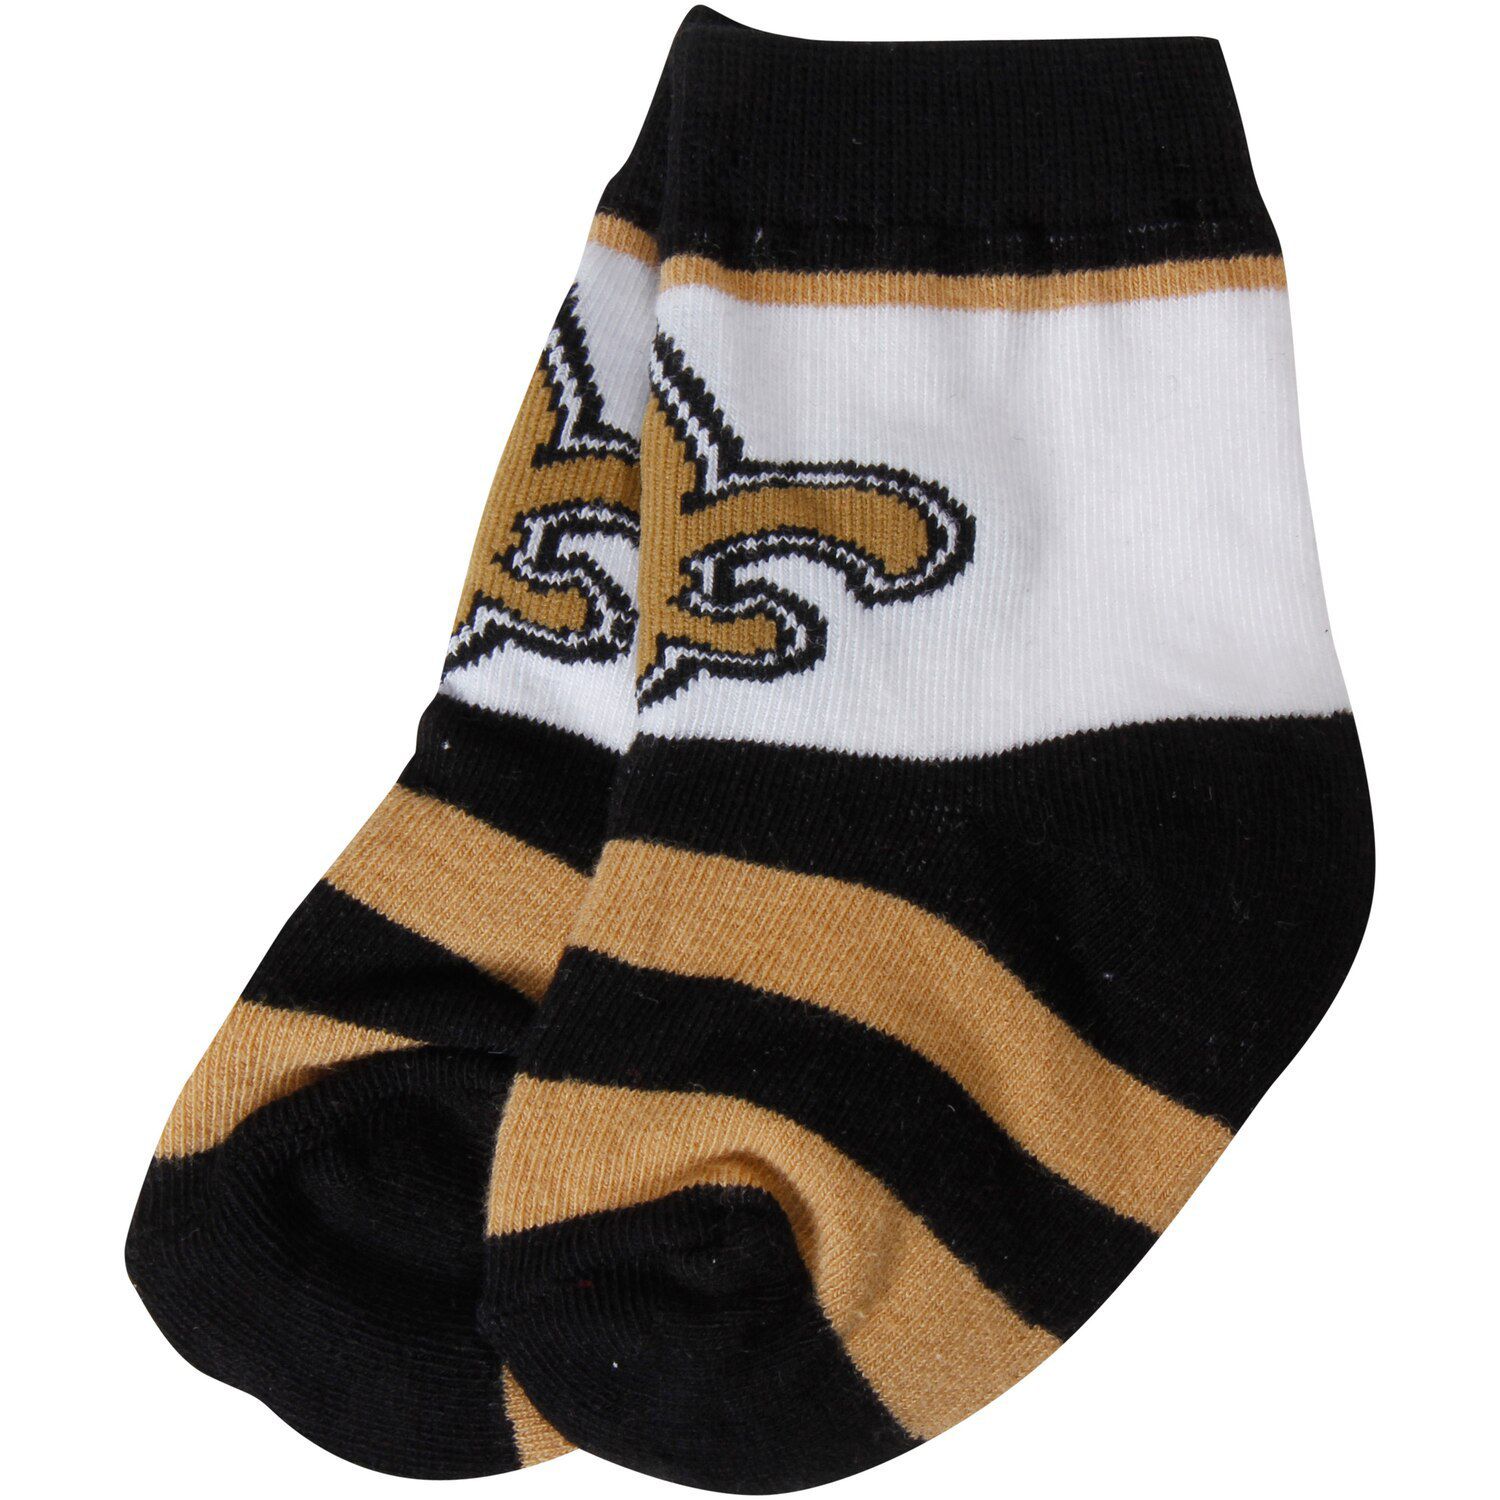 Image for Unbranded Infant For Bare Feet Black/Gold New Orleans Saints Team Color Rugby Block Socks at Kohl's.